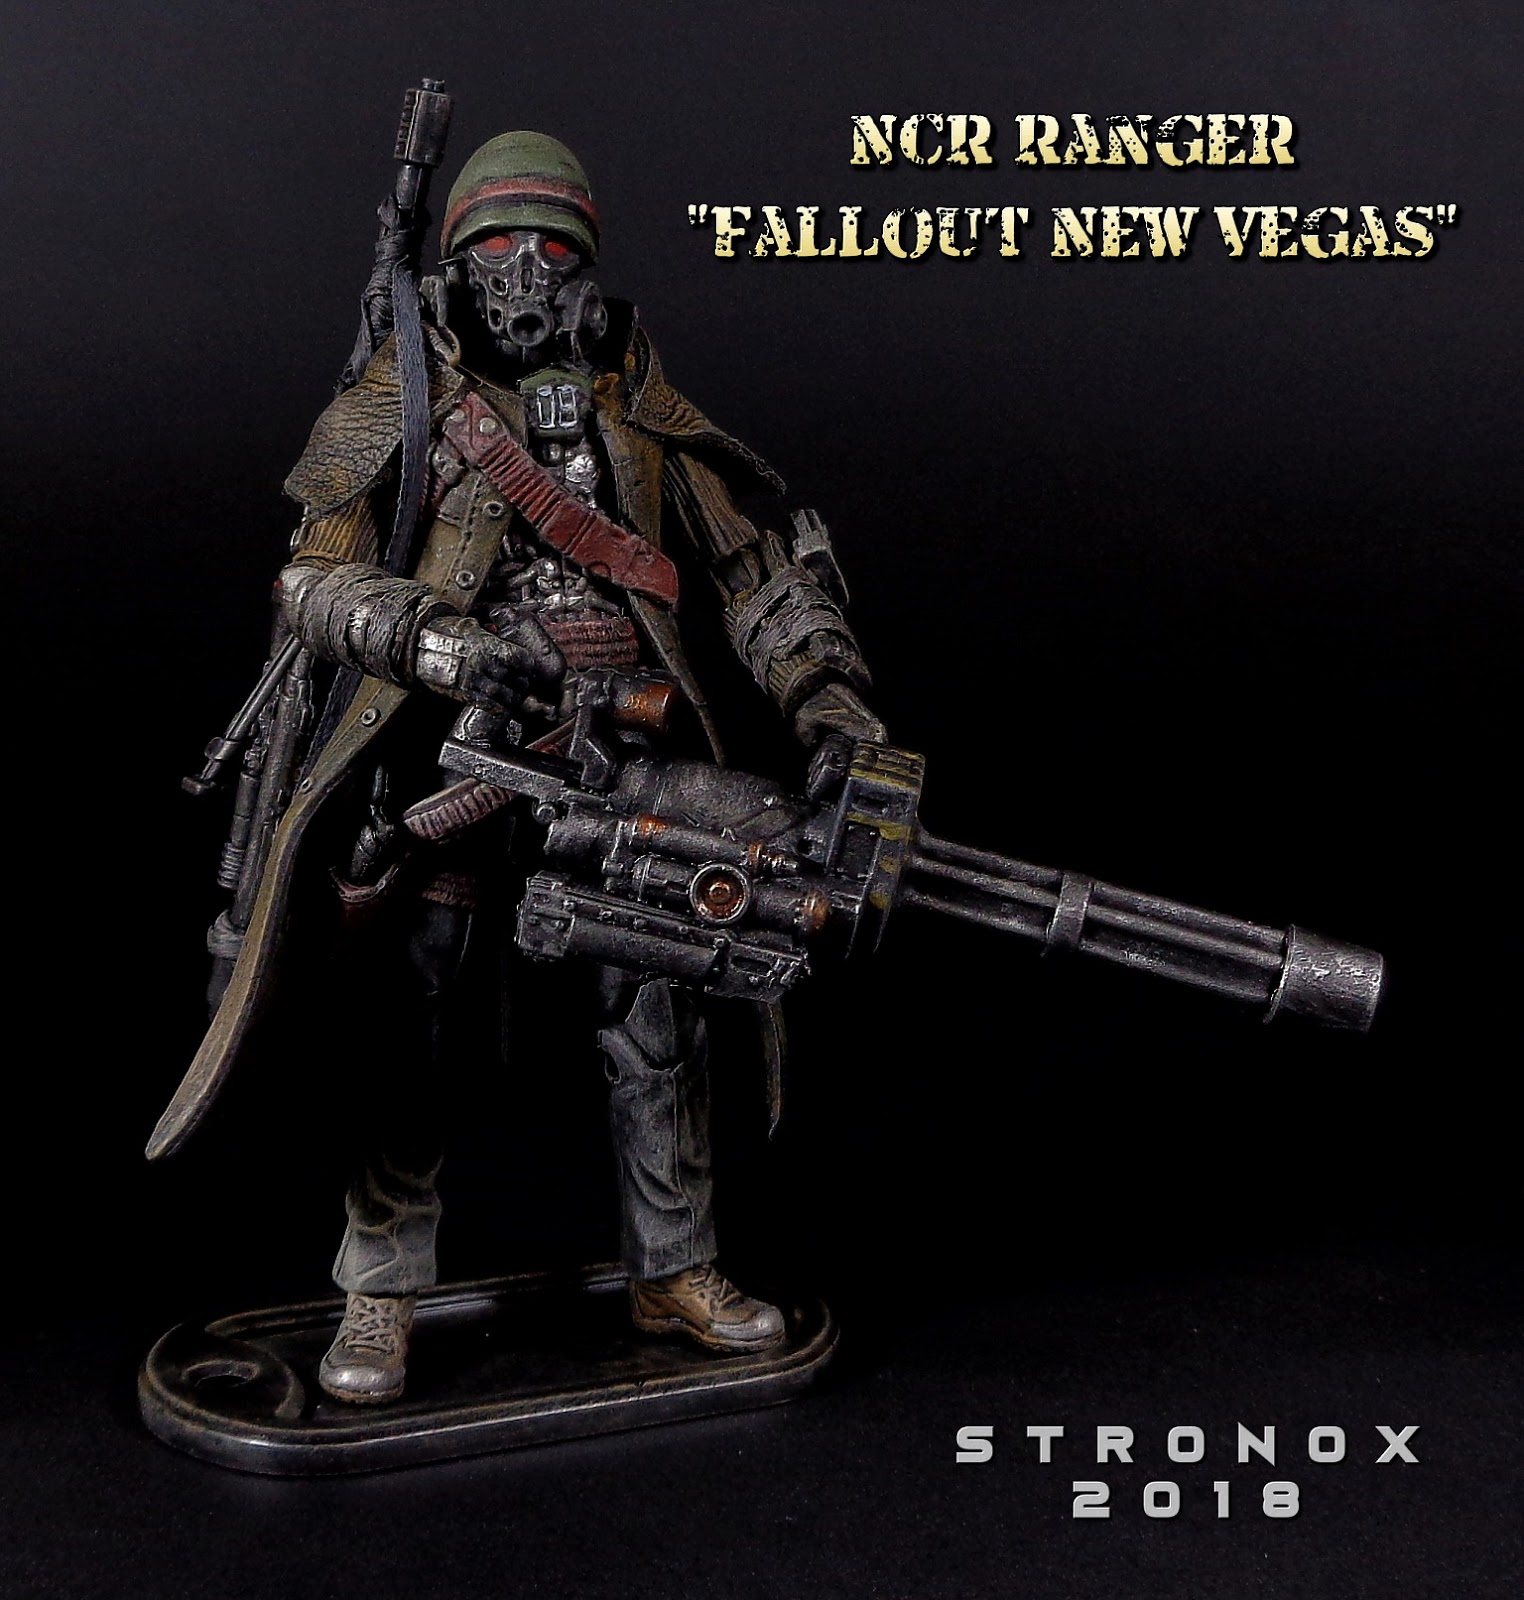 ncr ranger action figure